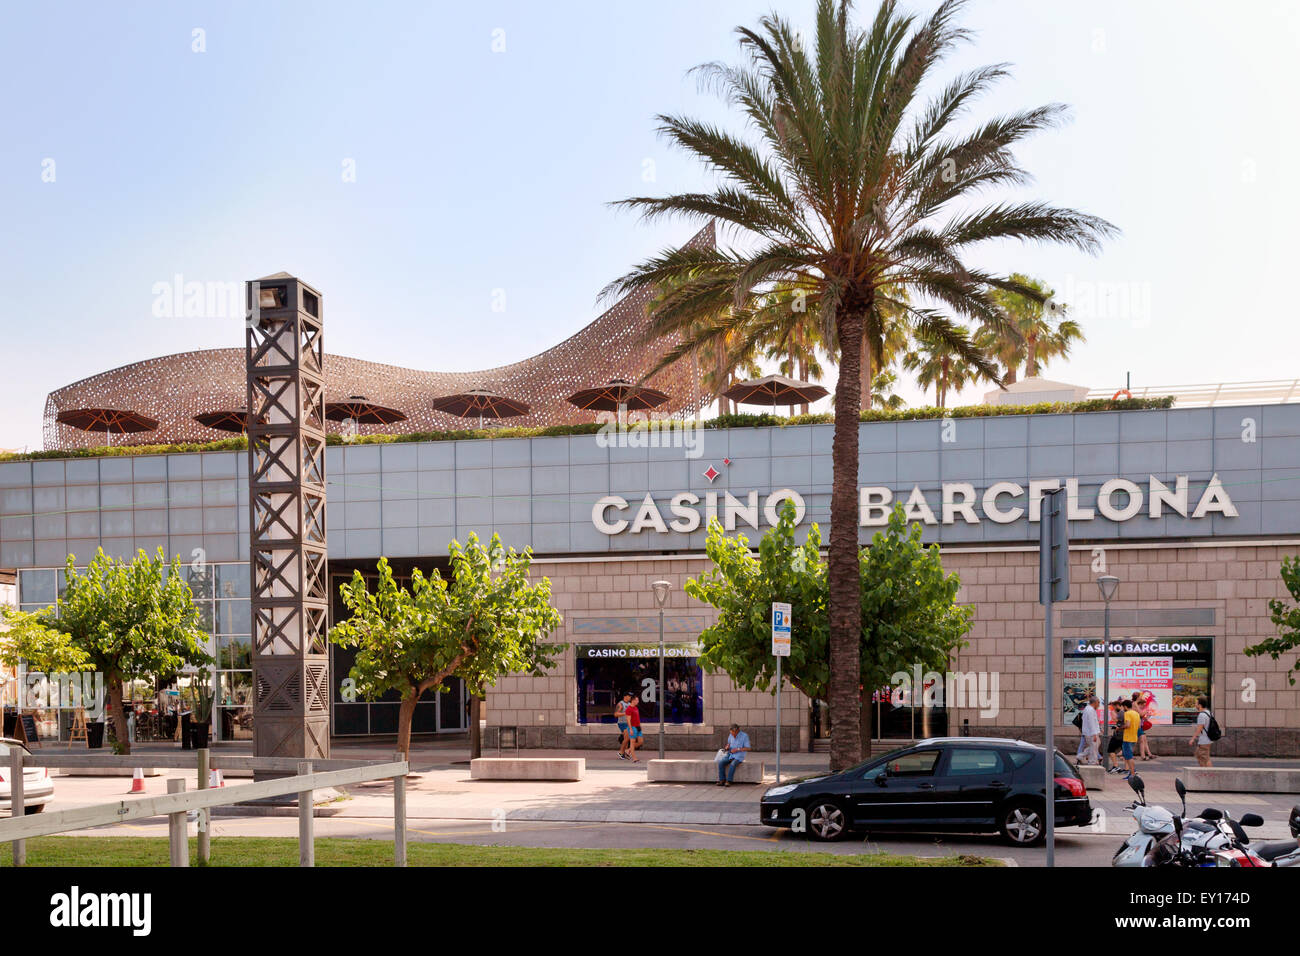 Barcelona Casino, Barceloneta, Barcelona Spain Europe Stock Photo